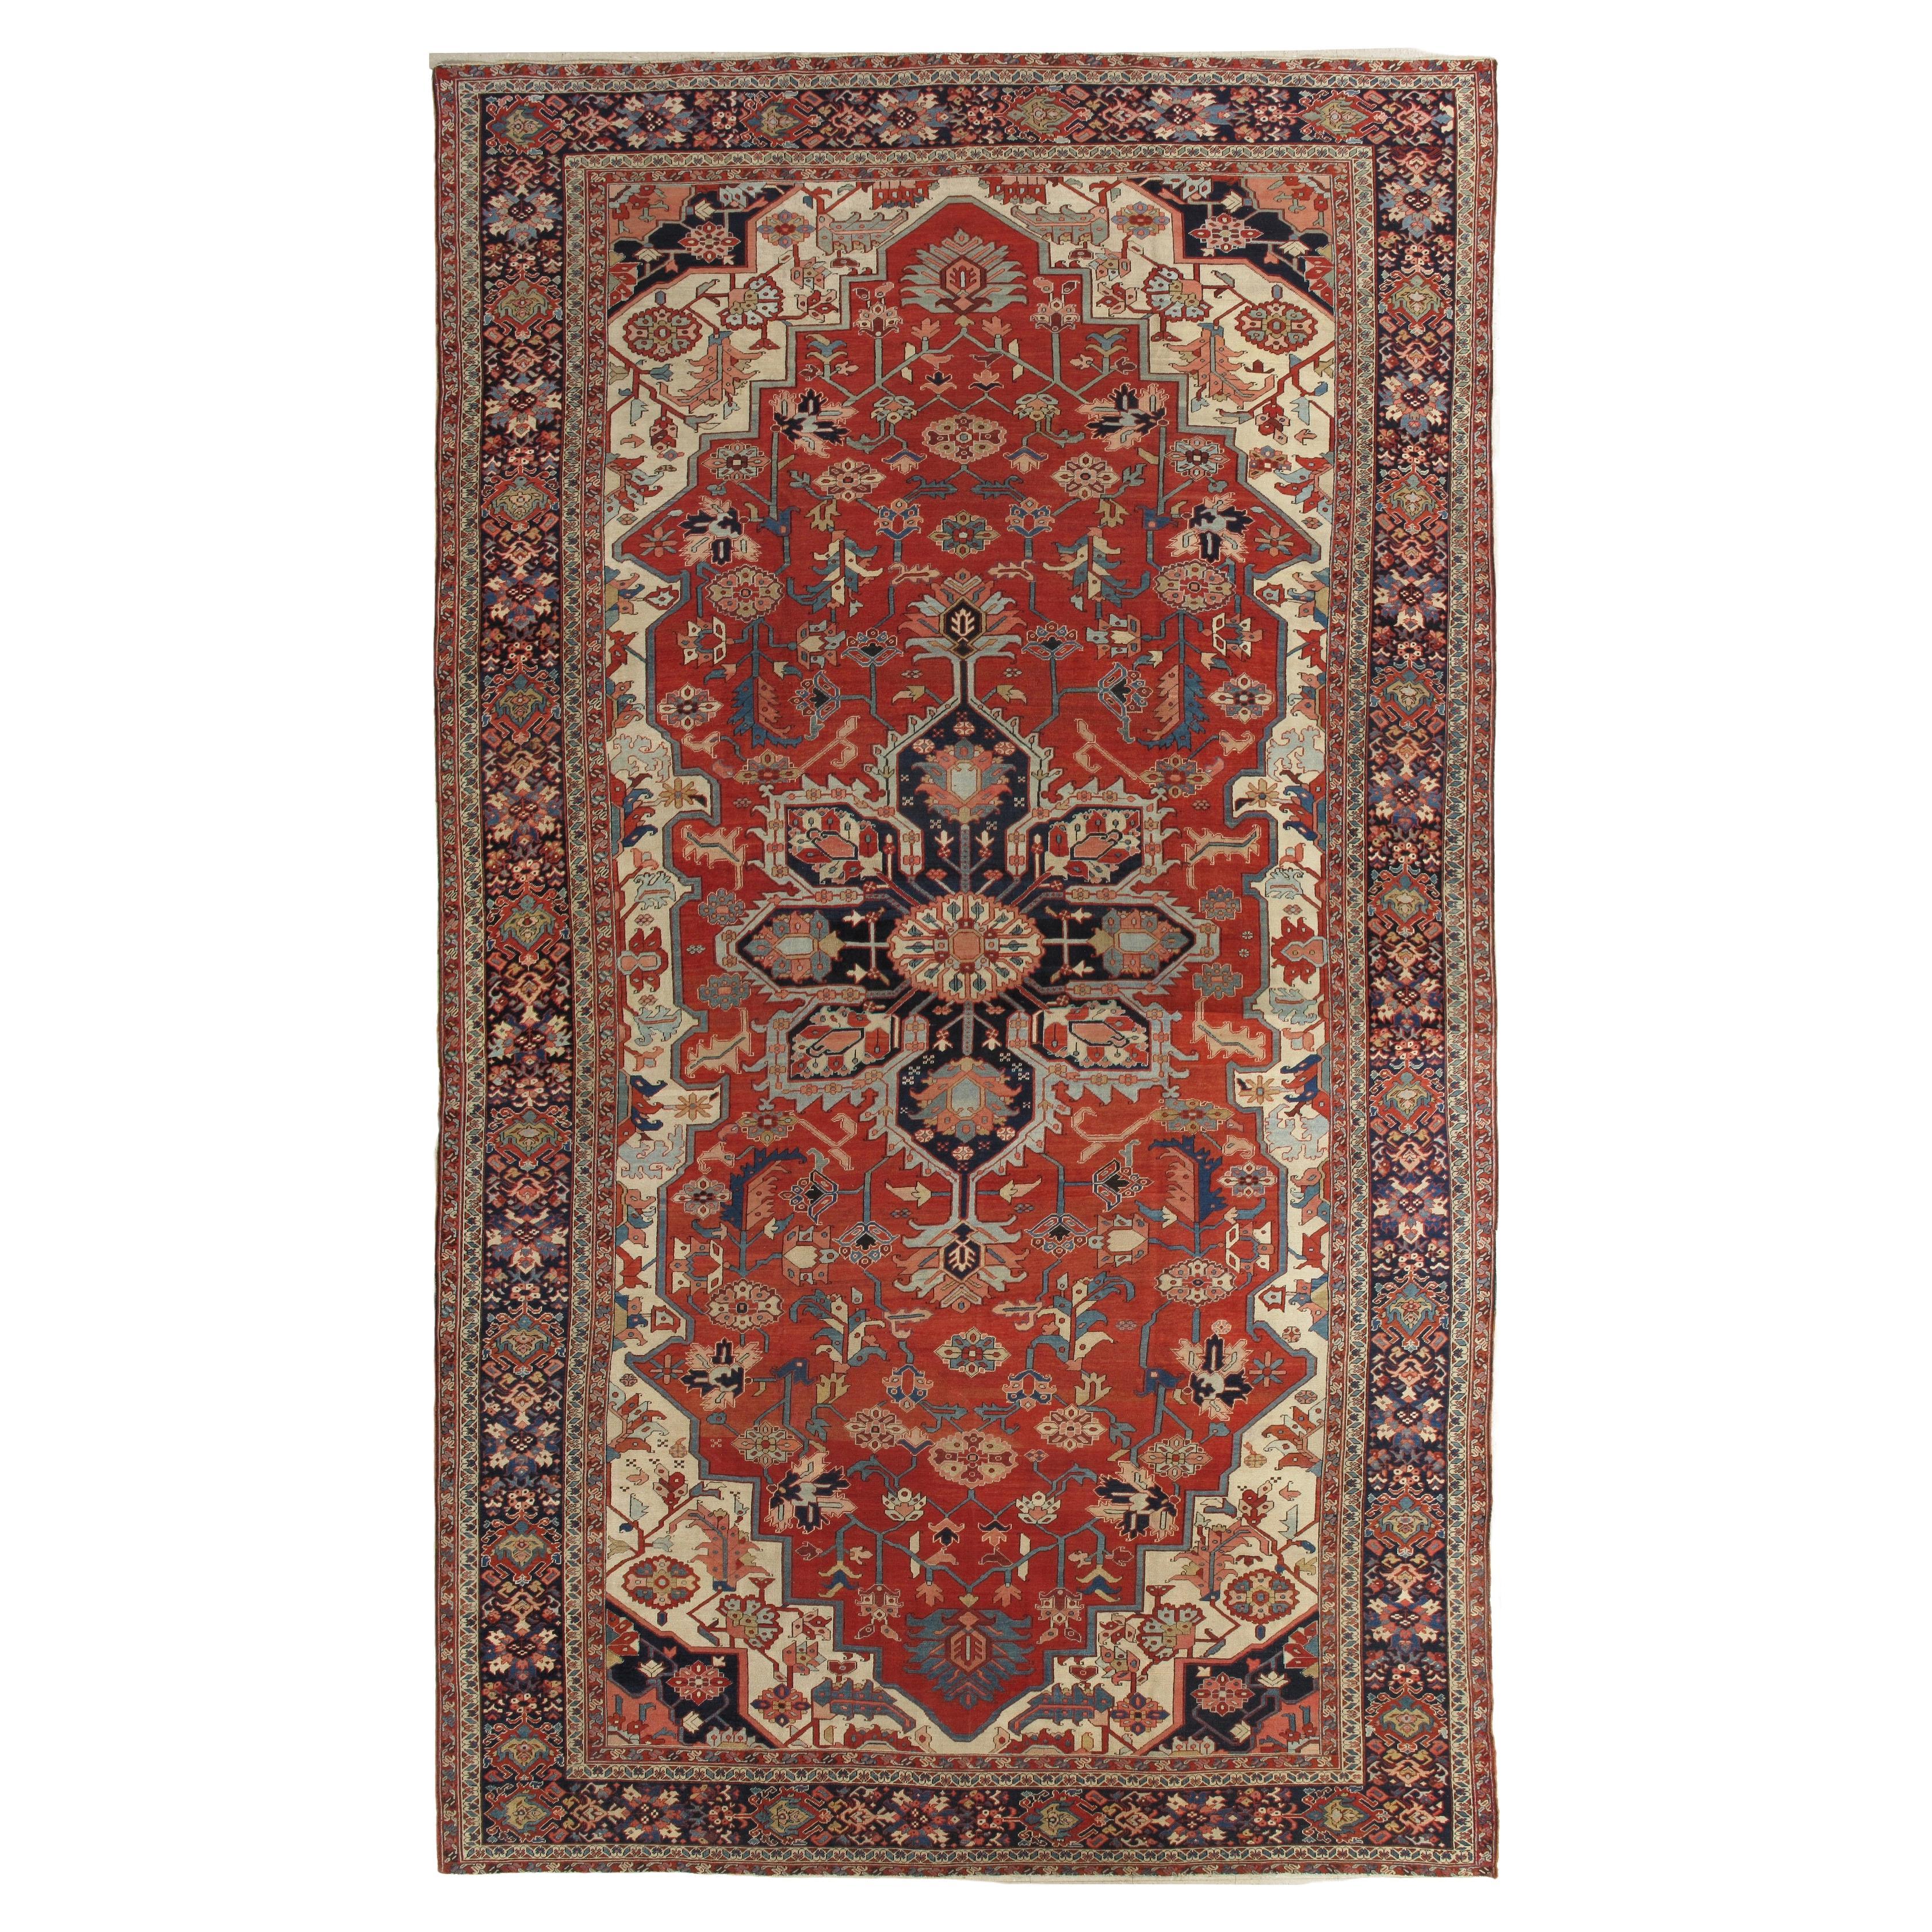 Antique Persian Serapi Carpet, Handmade Wool Oriental Rug Ivory, Rust Light Blue For Sale